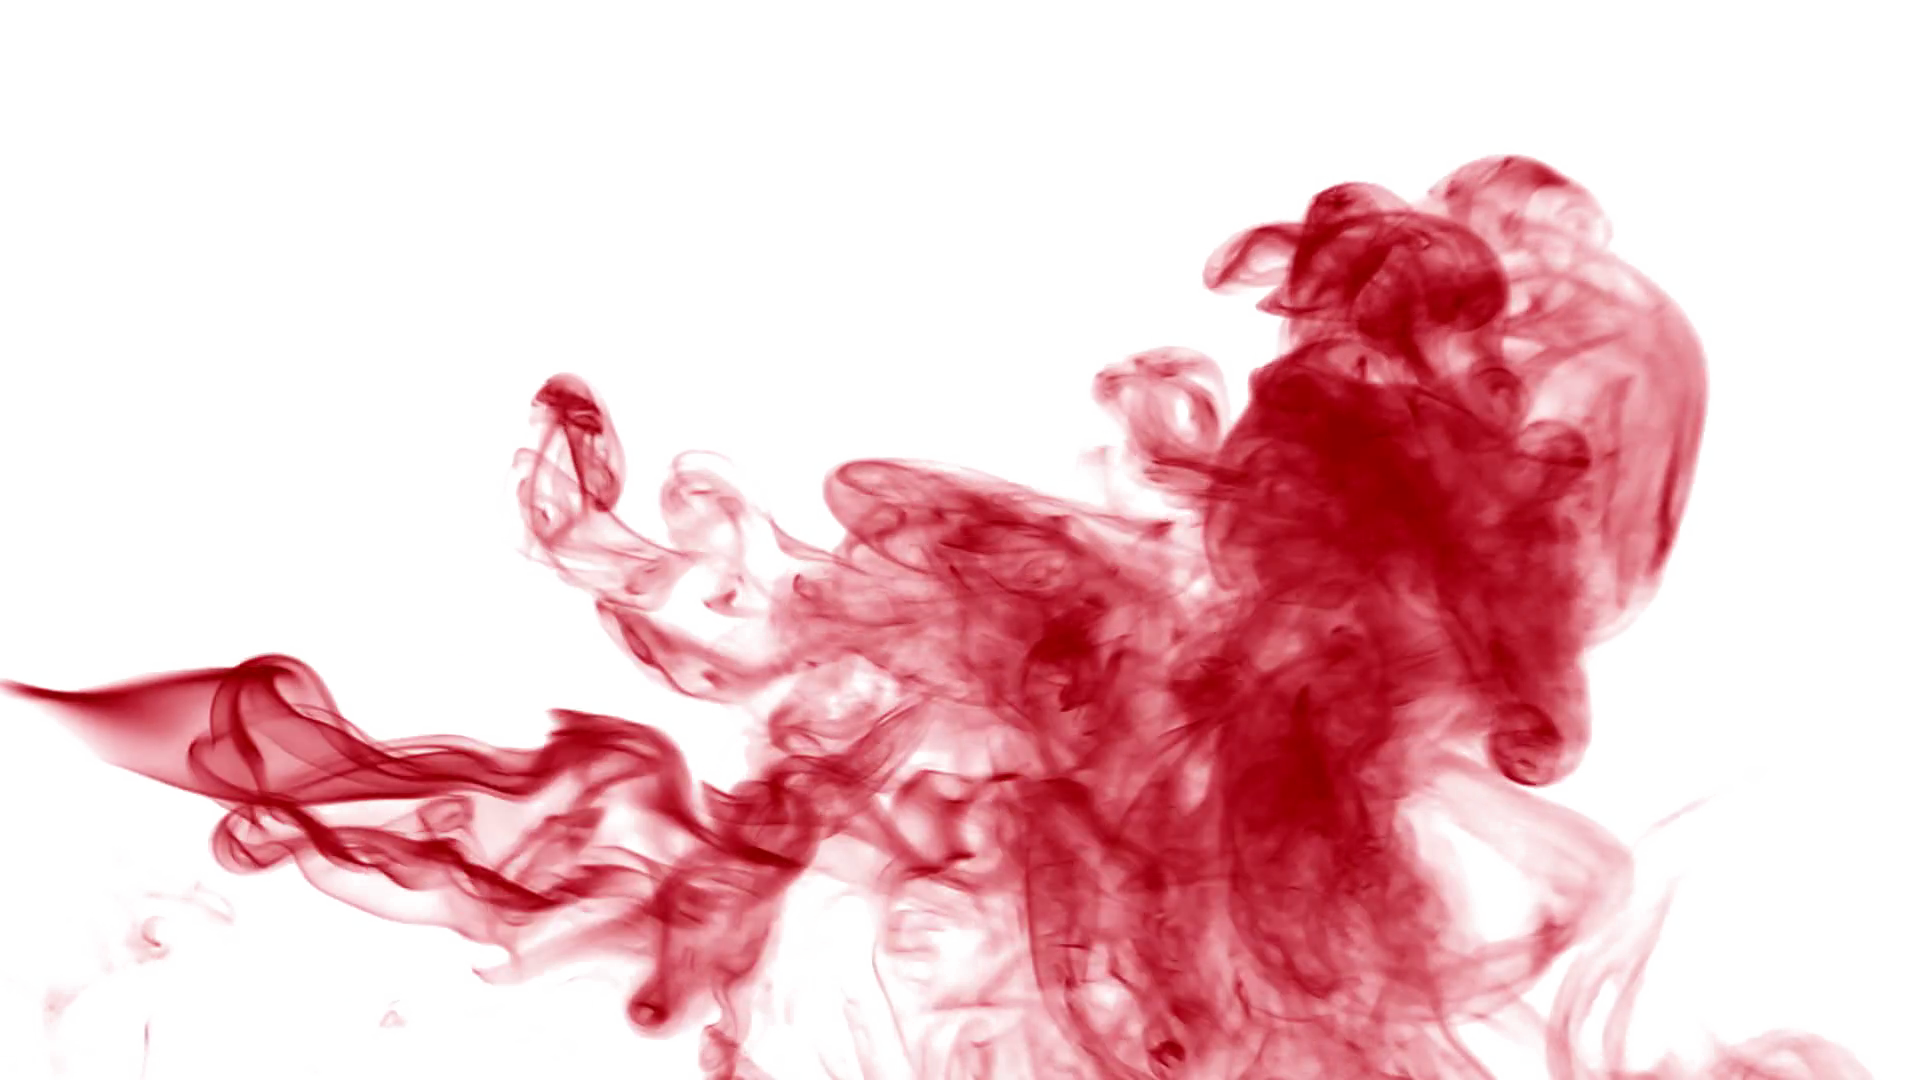 Humo rojo PNG imagen transparente